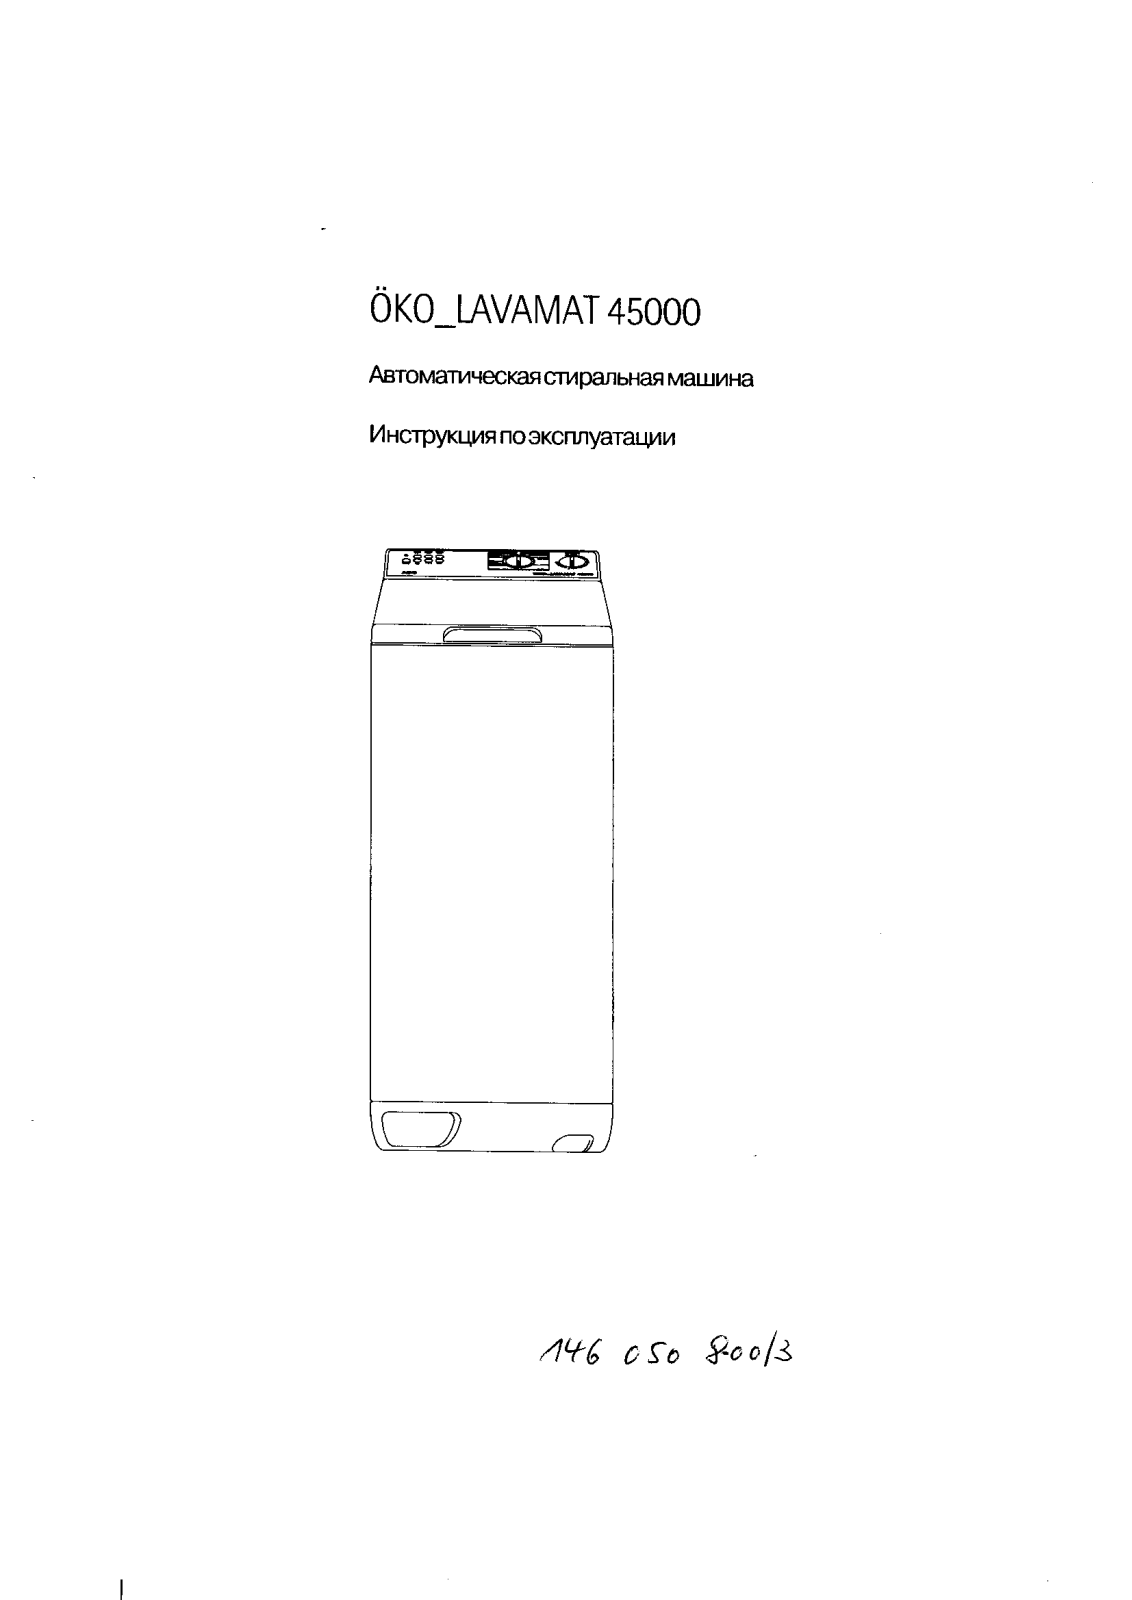 AEG OKO LAVAMAT 45000 User Manual